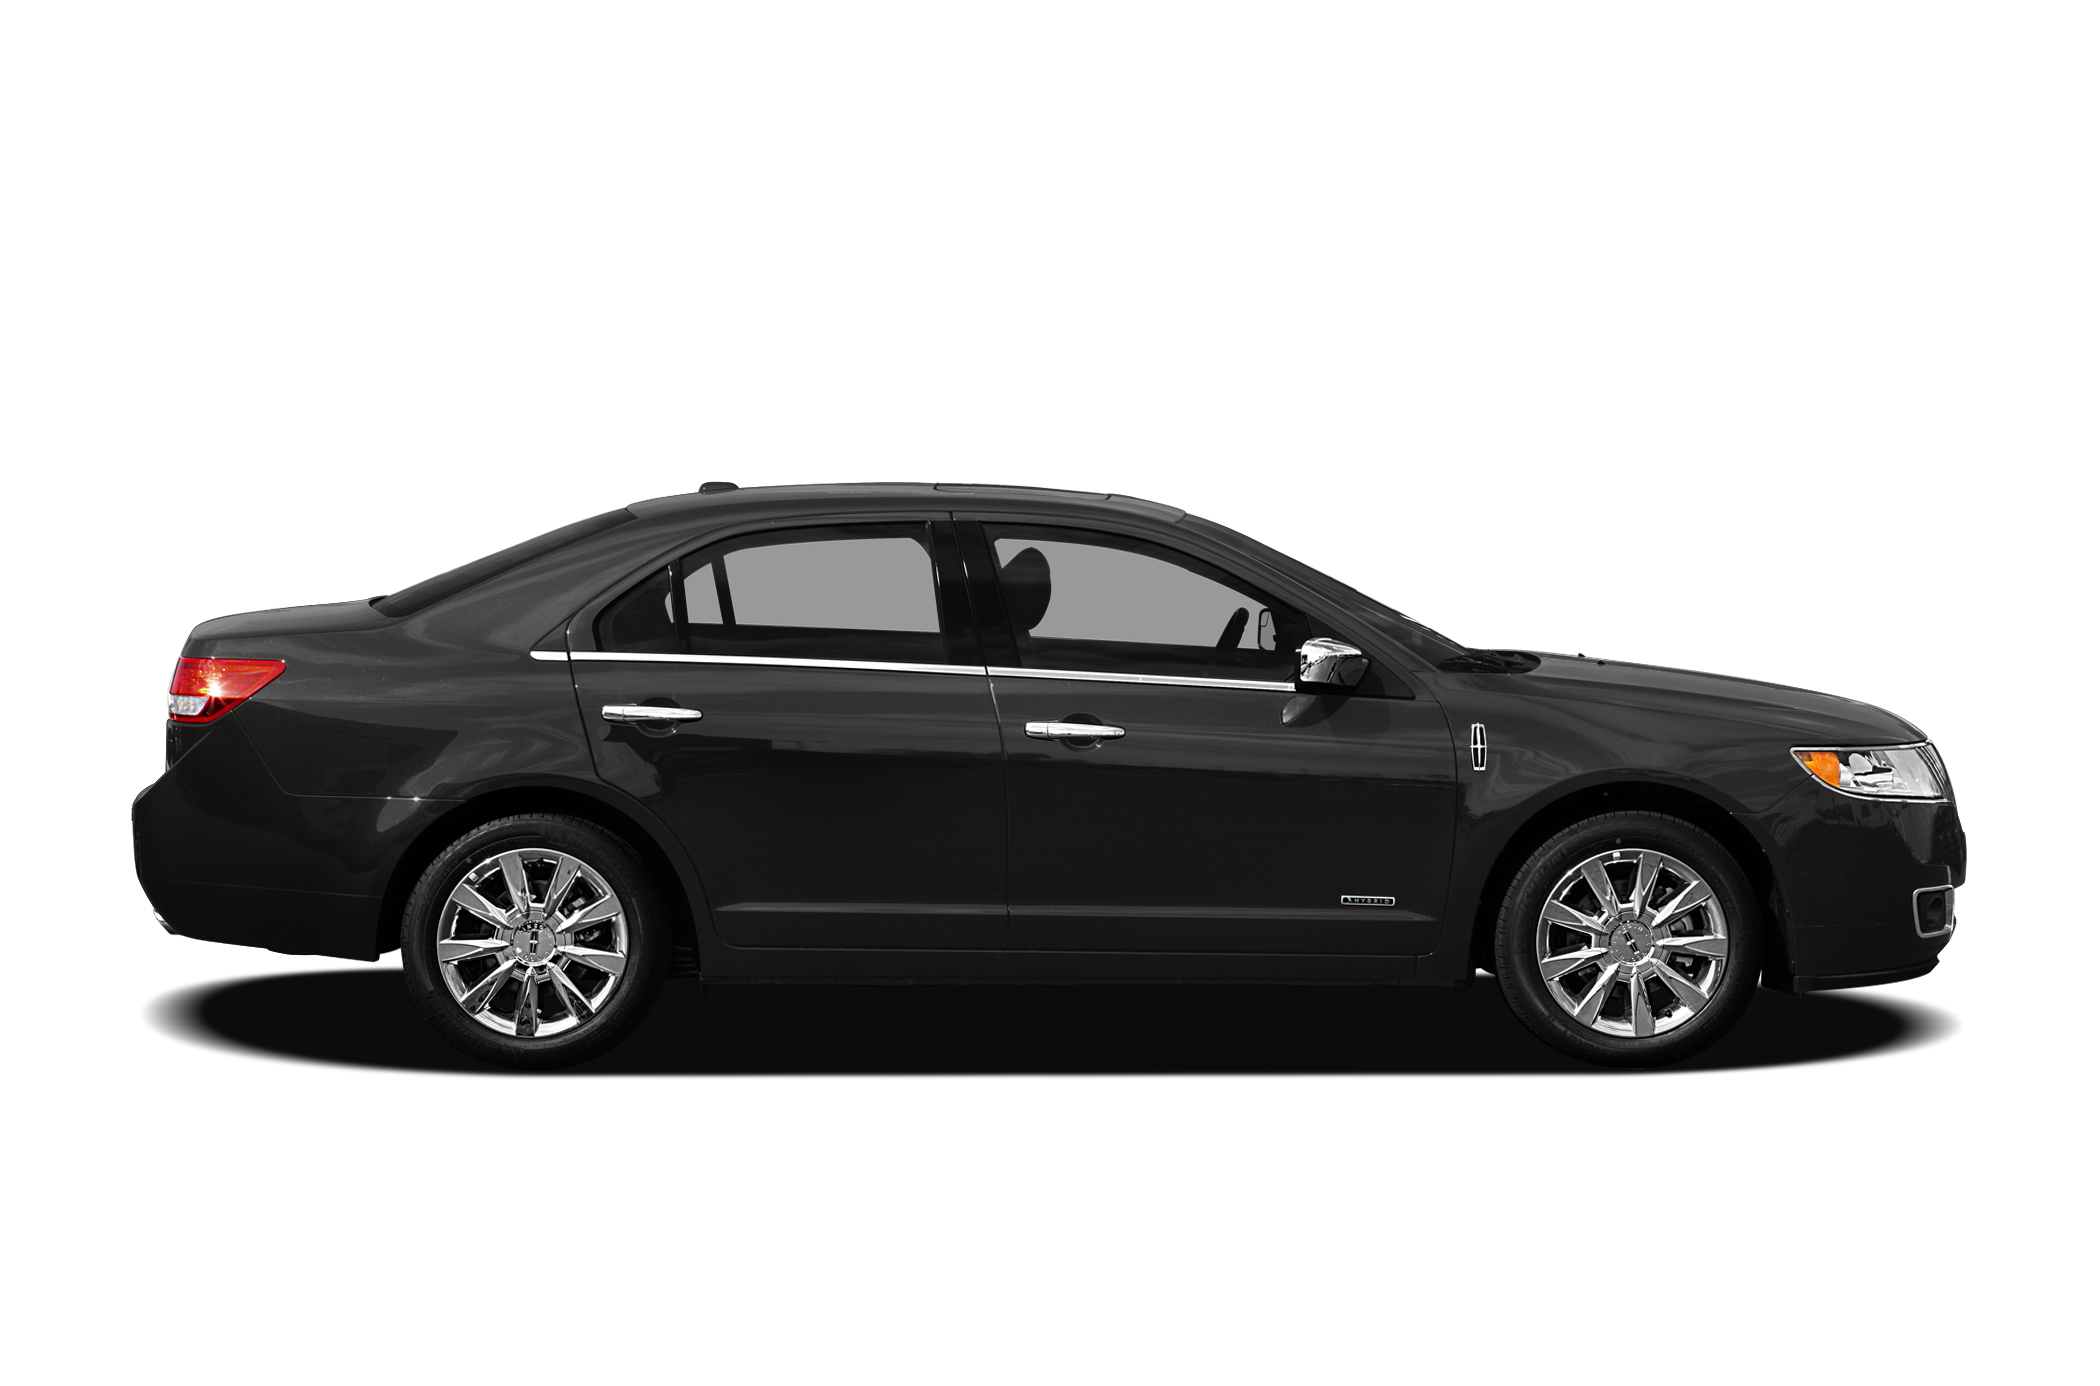 2012 Lincoln MKZ Hybrid